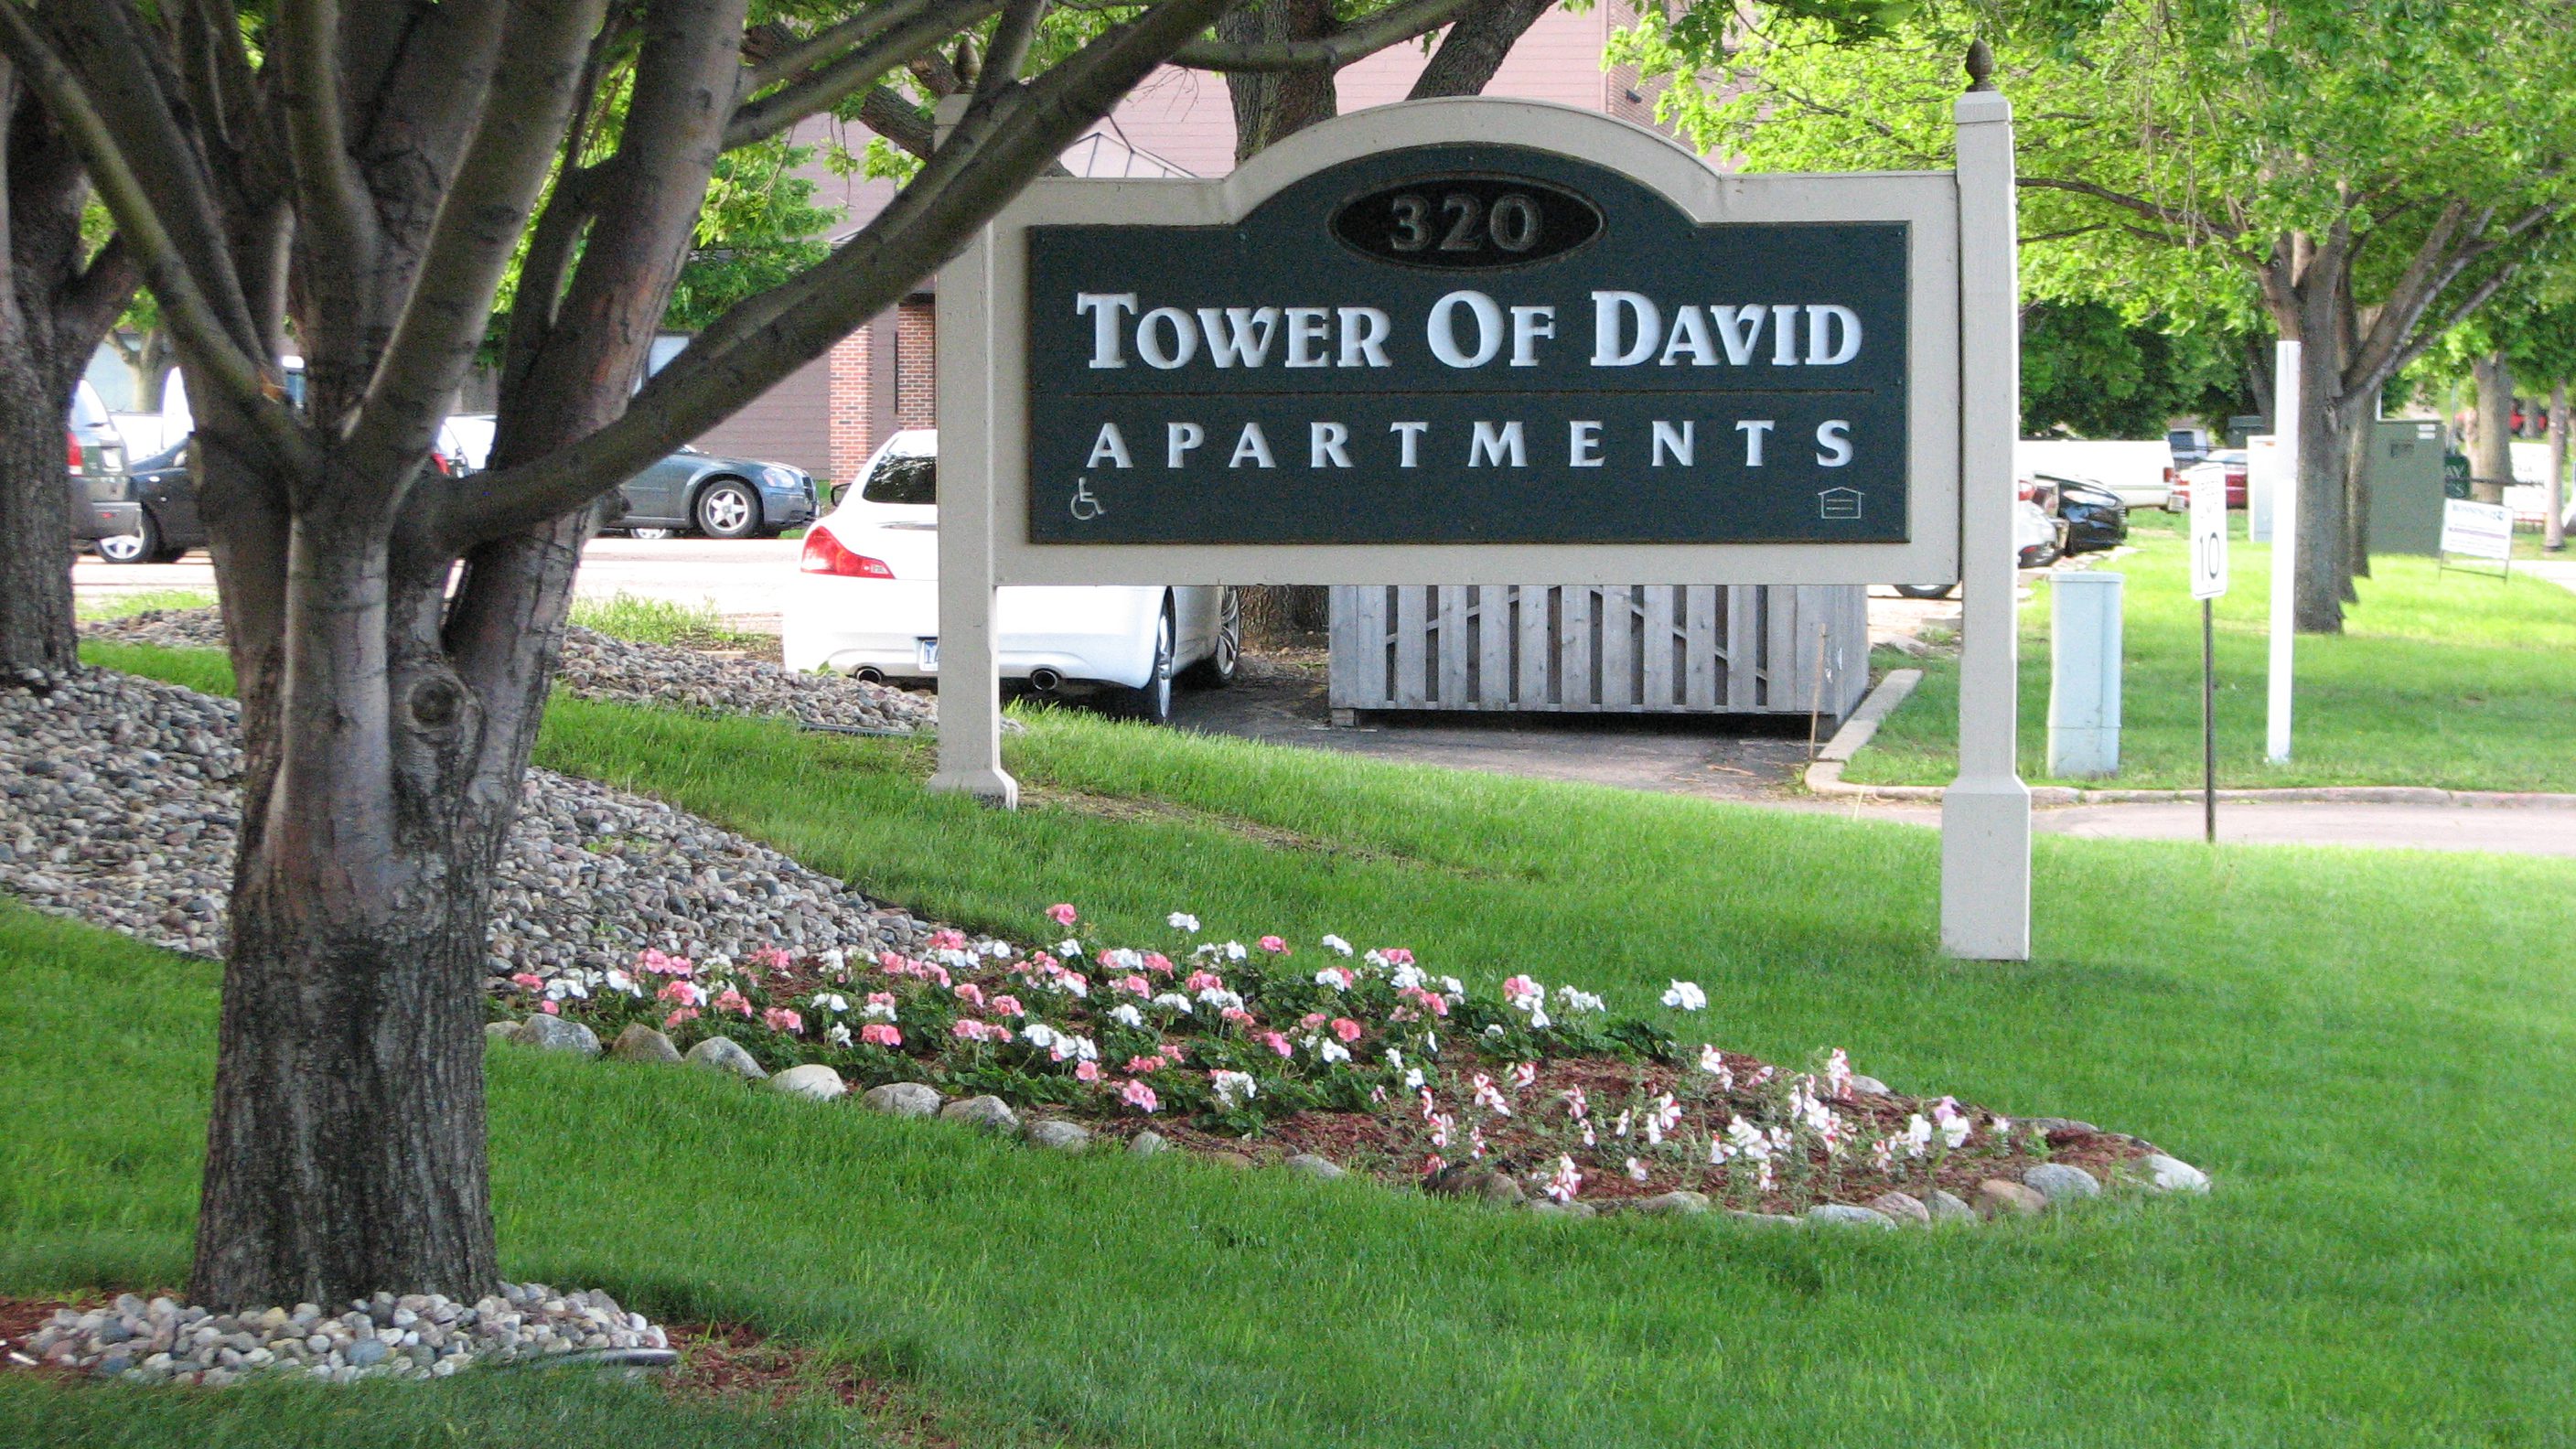 TOWER OF DAVID APARTMENTS